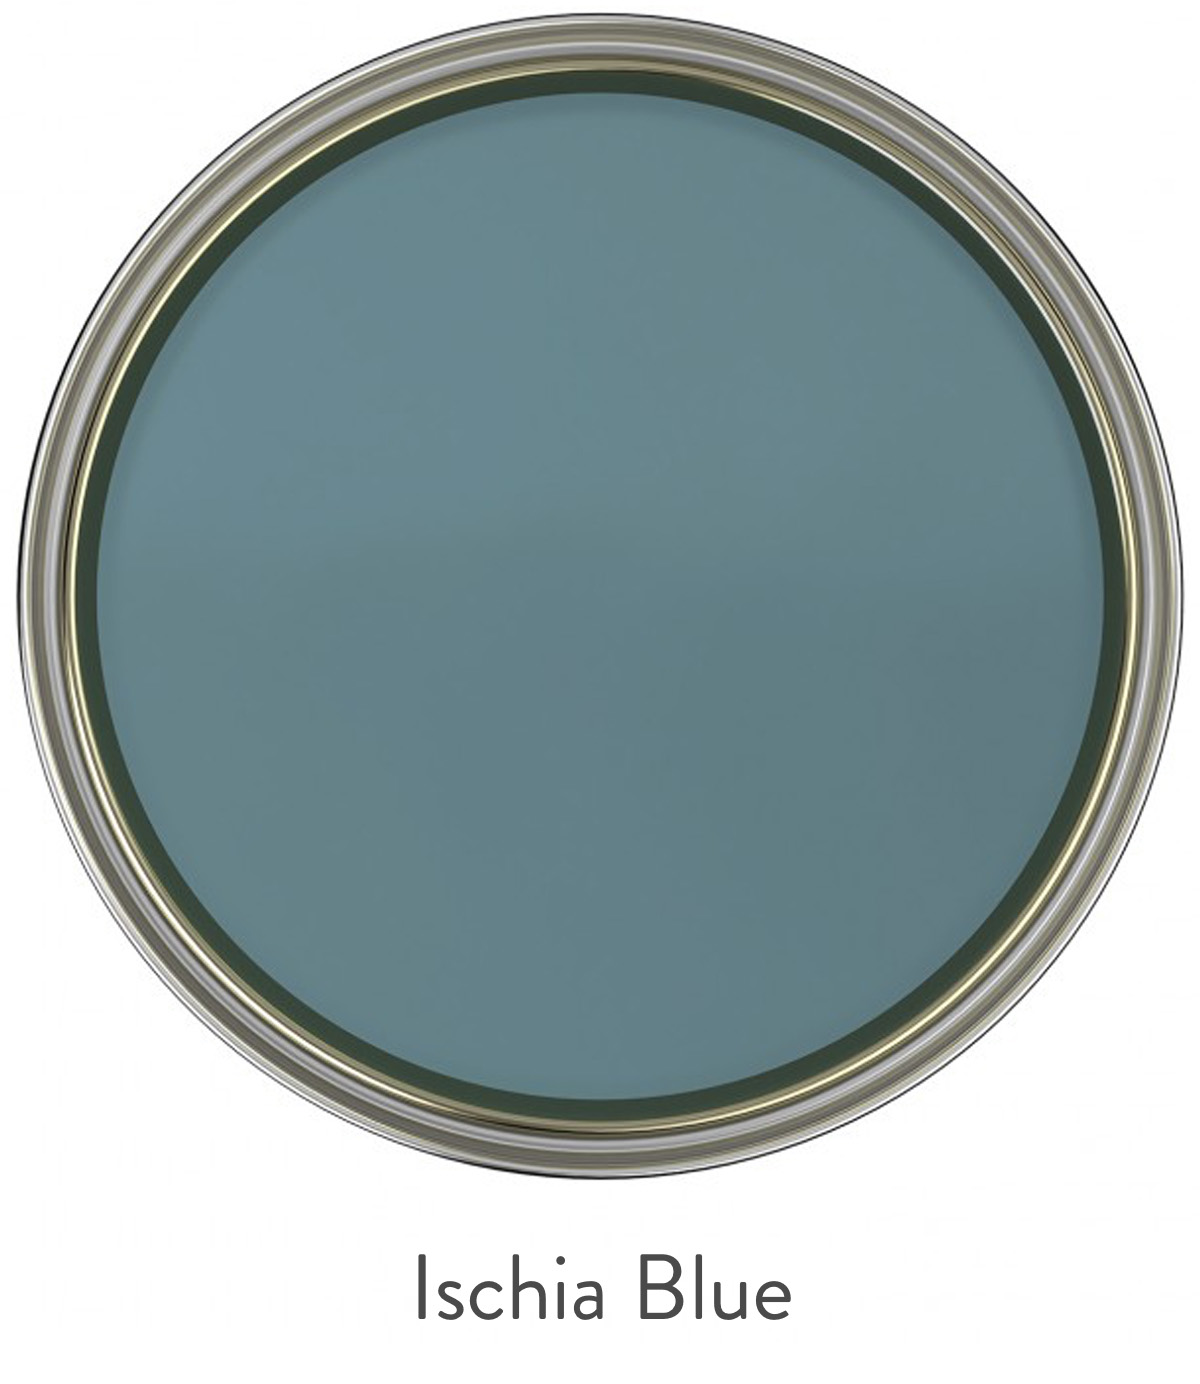 The Pure Edit Ischia Blue Paint